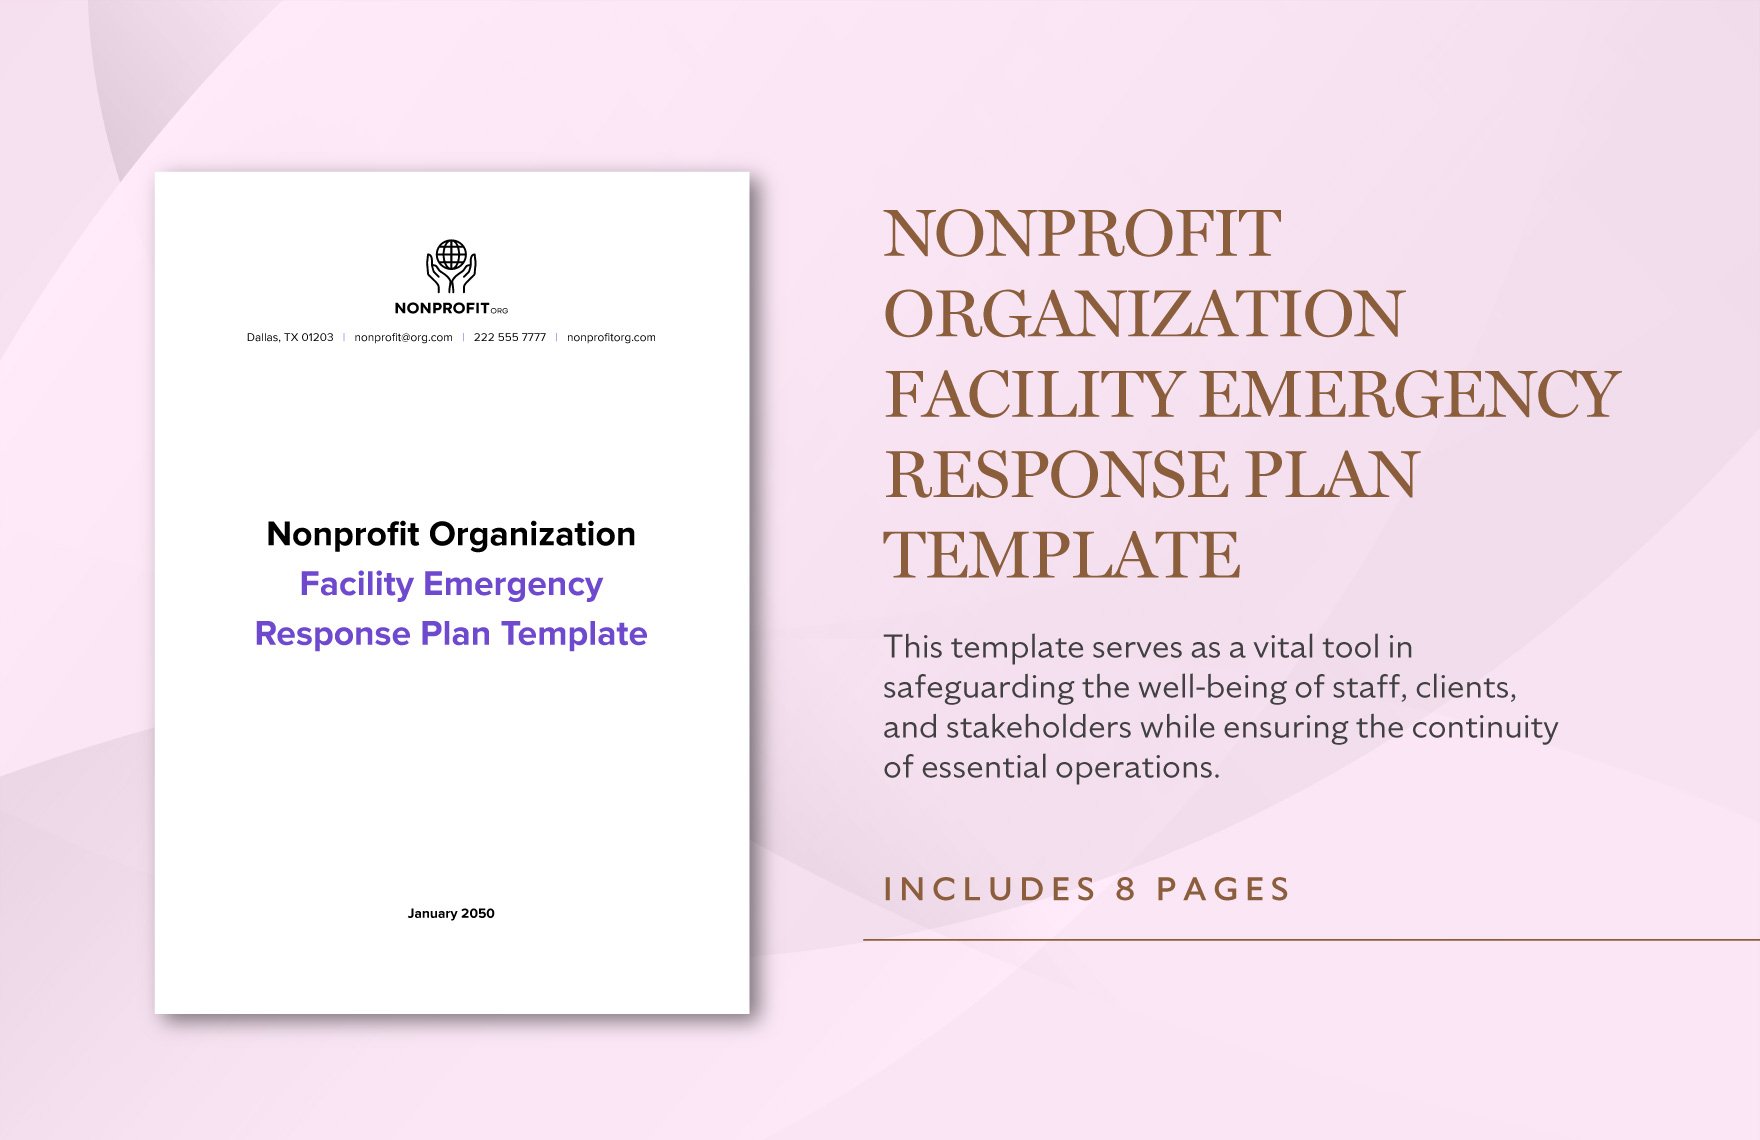 Nonprofit Organization Facility Emergency Response Plan Template